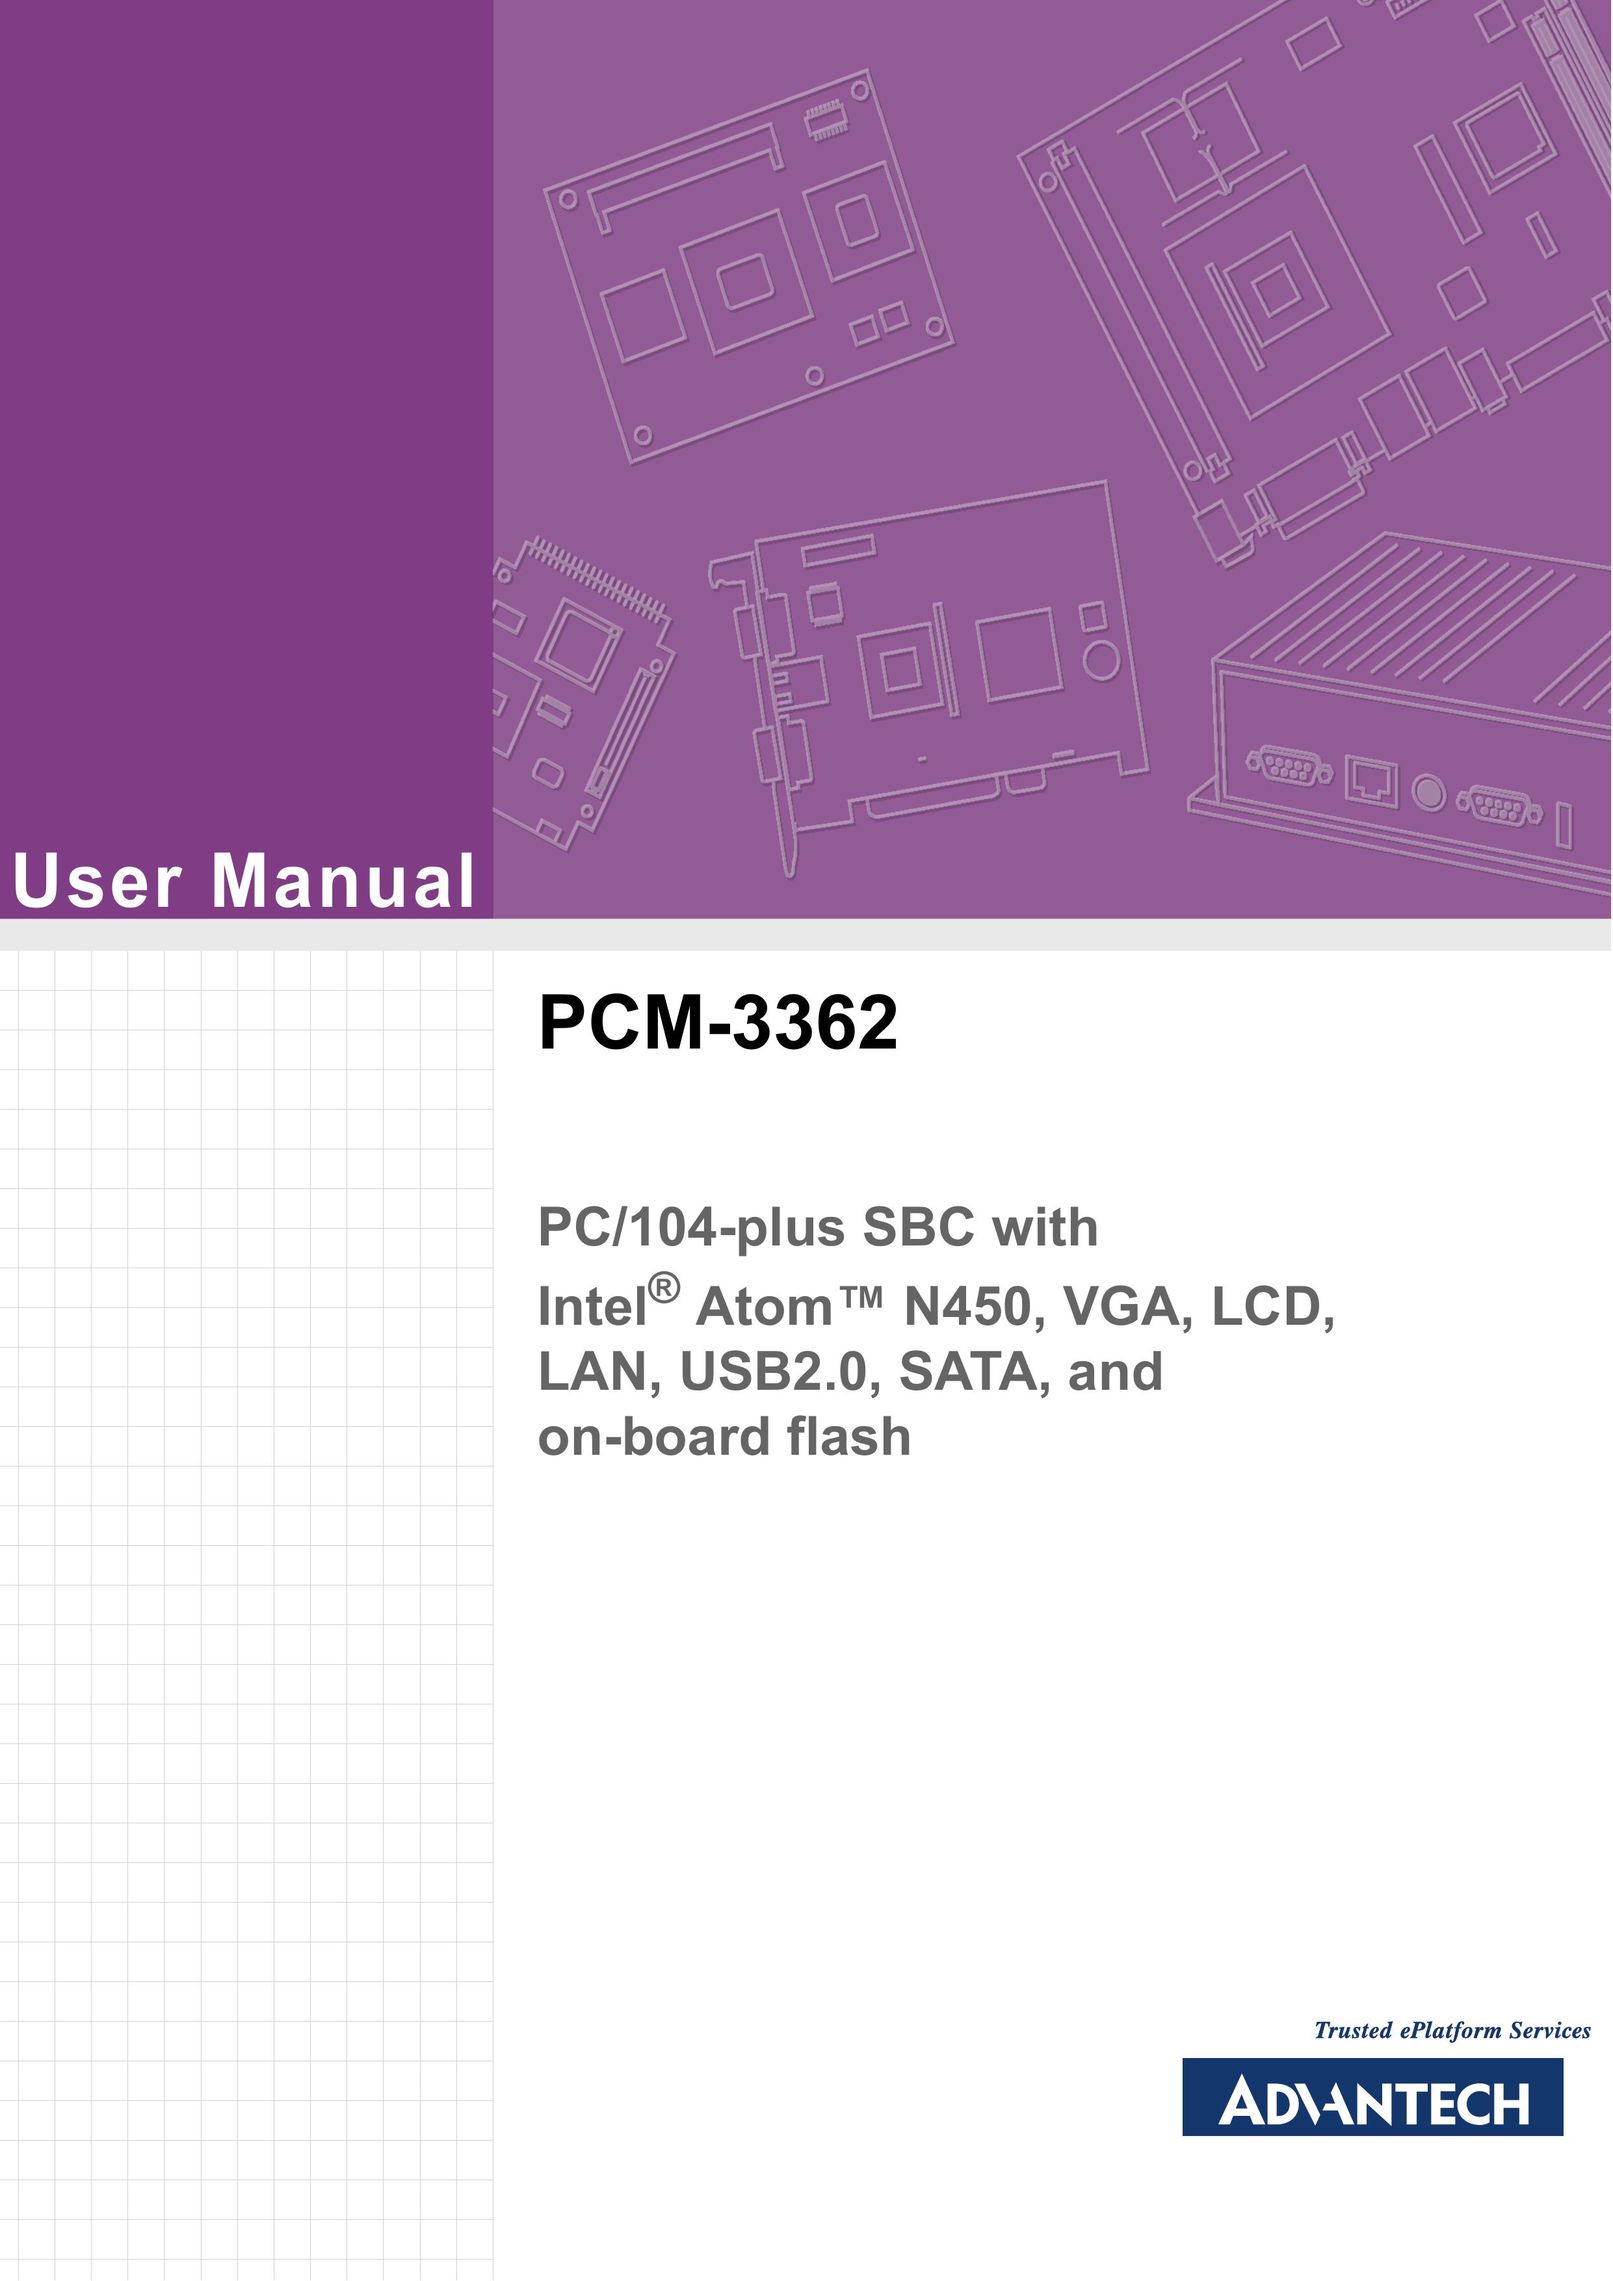 Advantech PCM-3362 Personal Computer User Manual